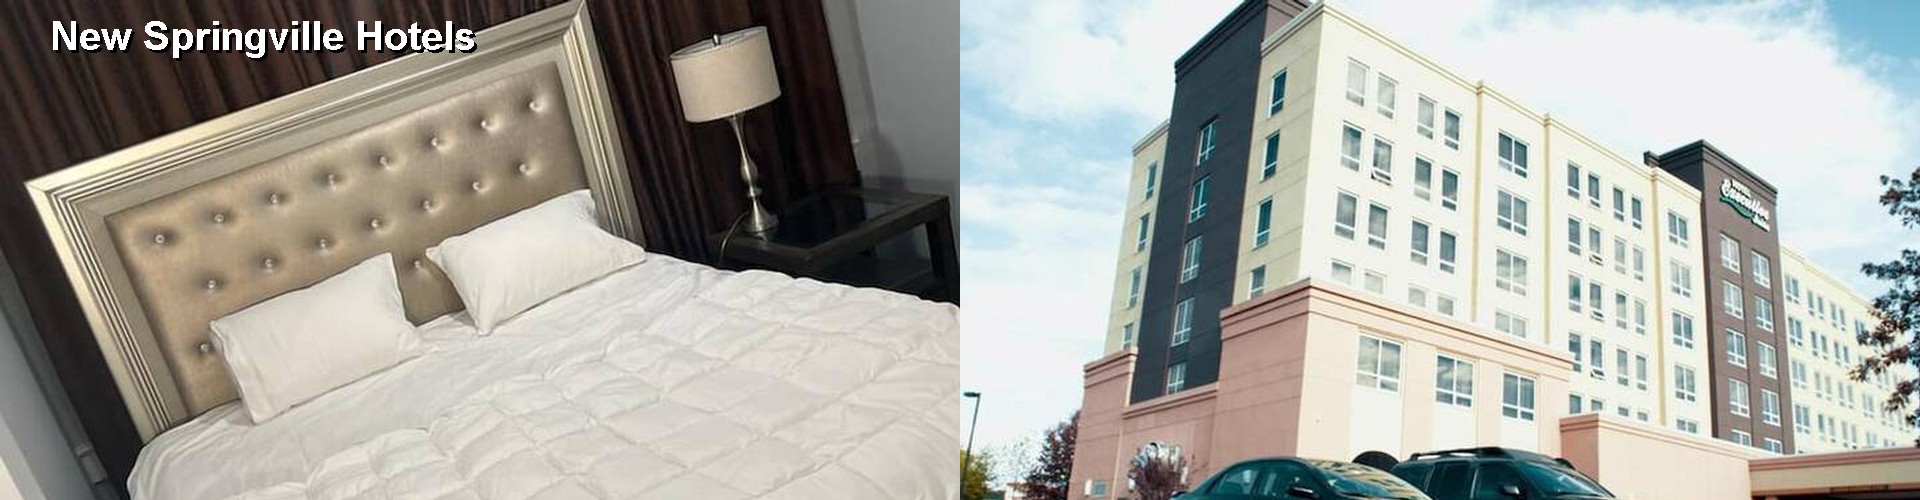 4 Best Hotels near New Springville